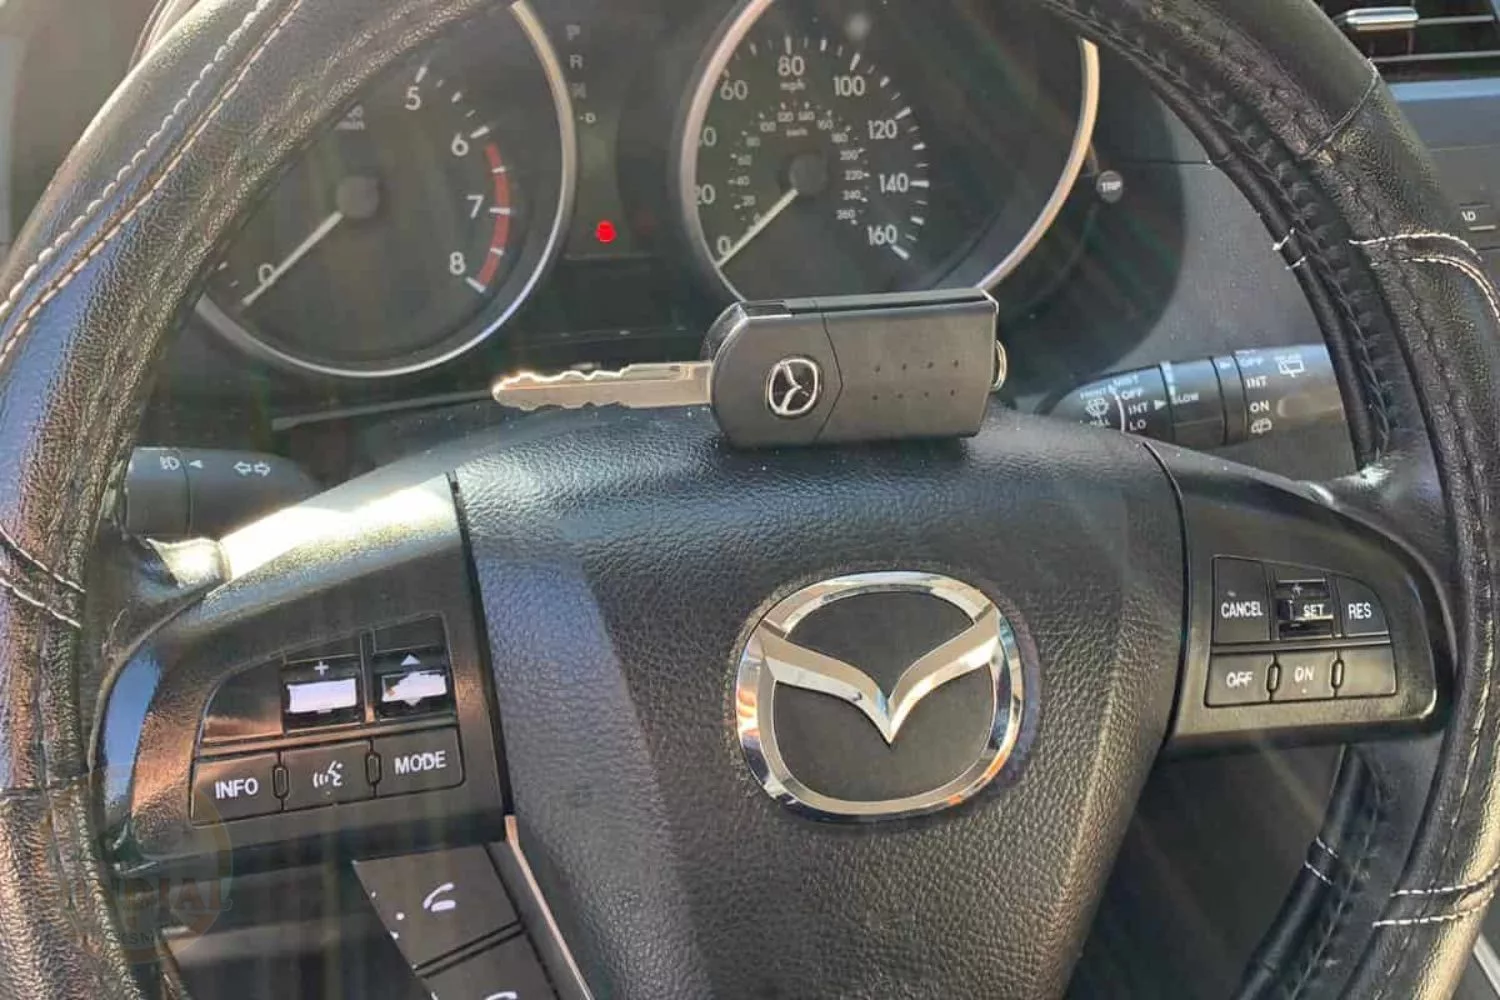 Mazda car steering wheel and dashboard view.